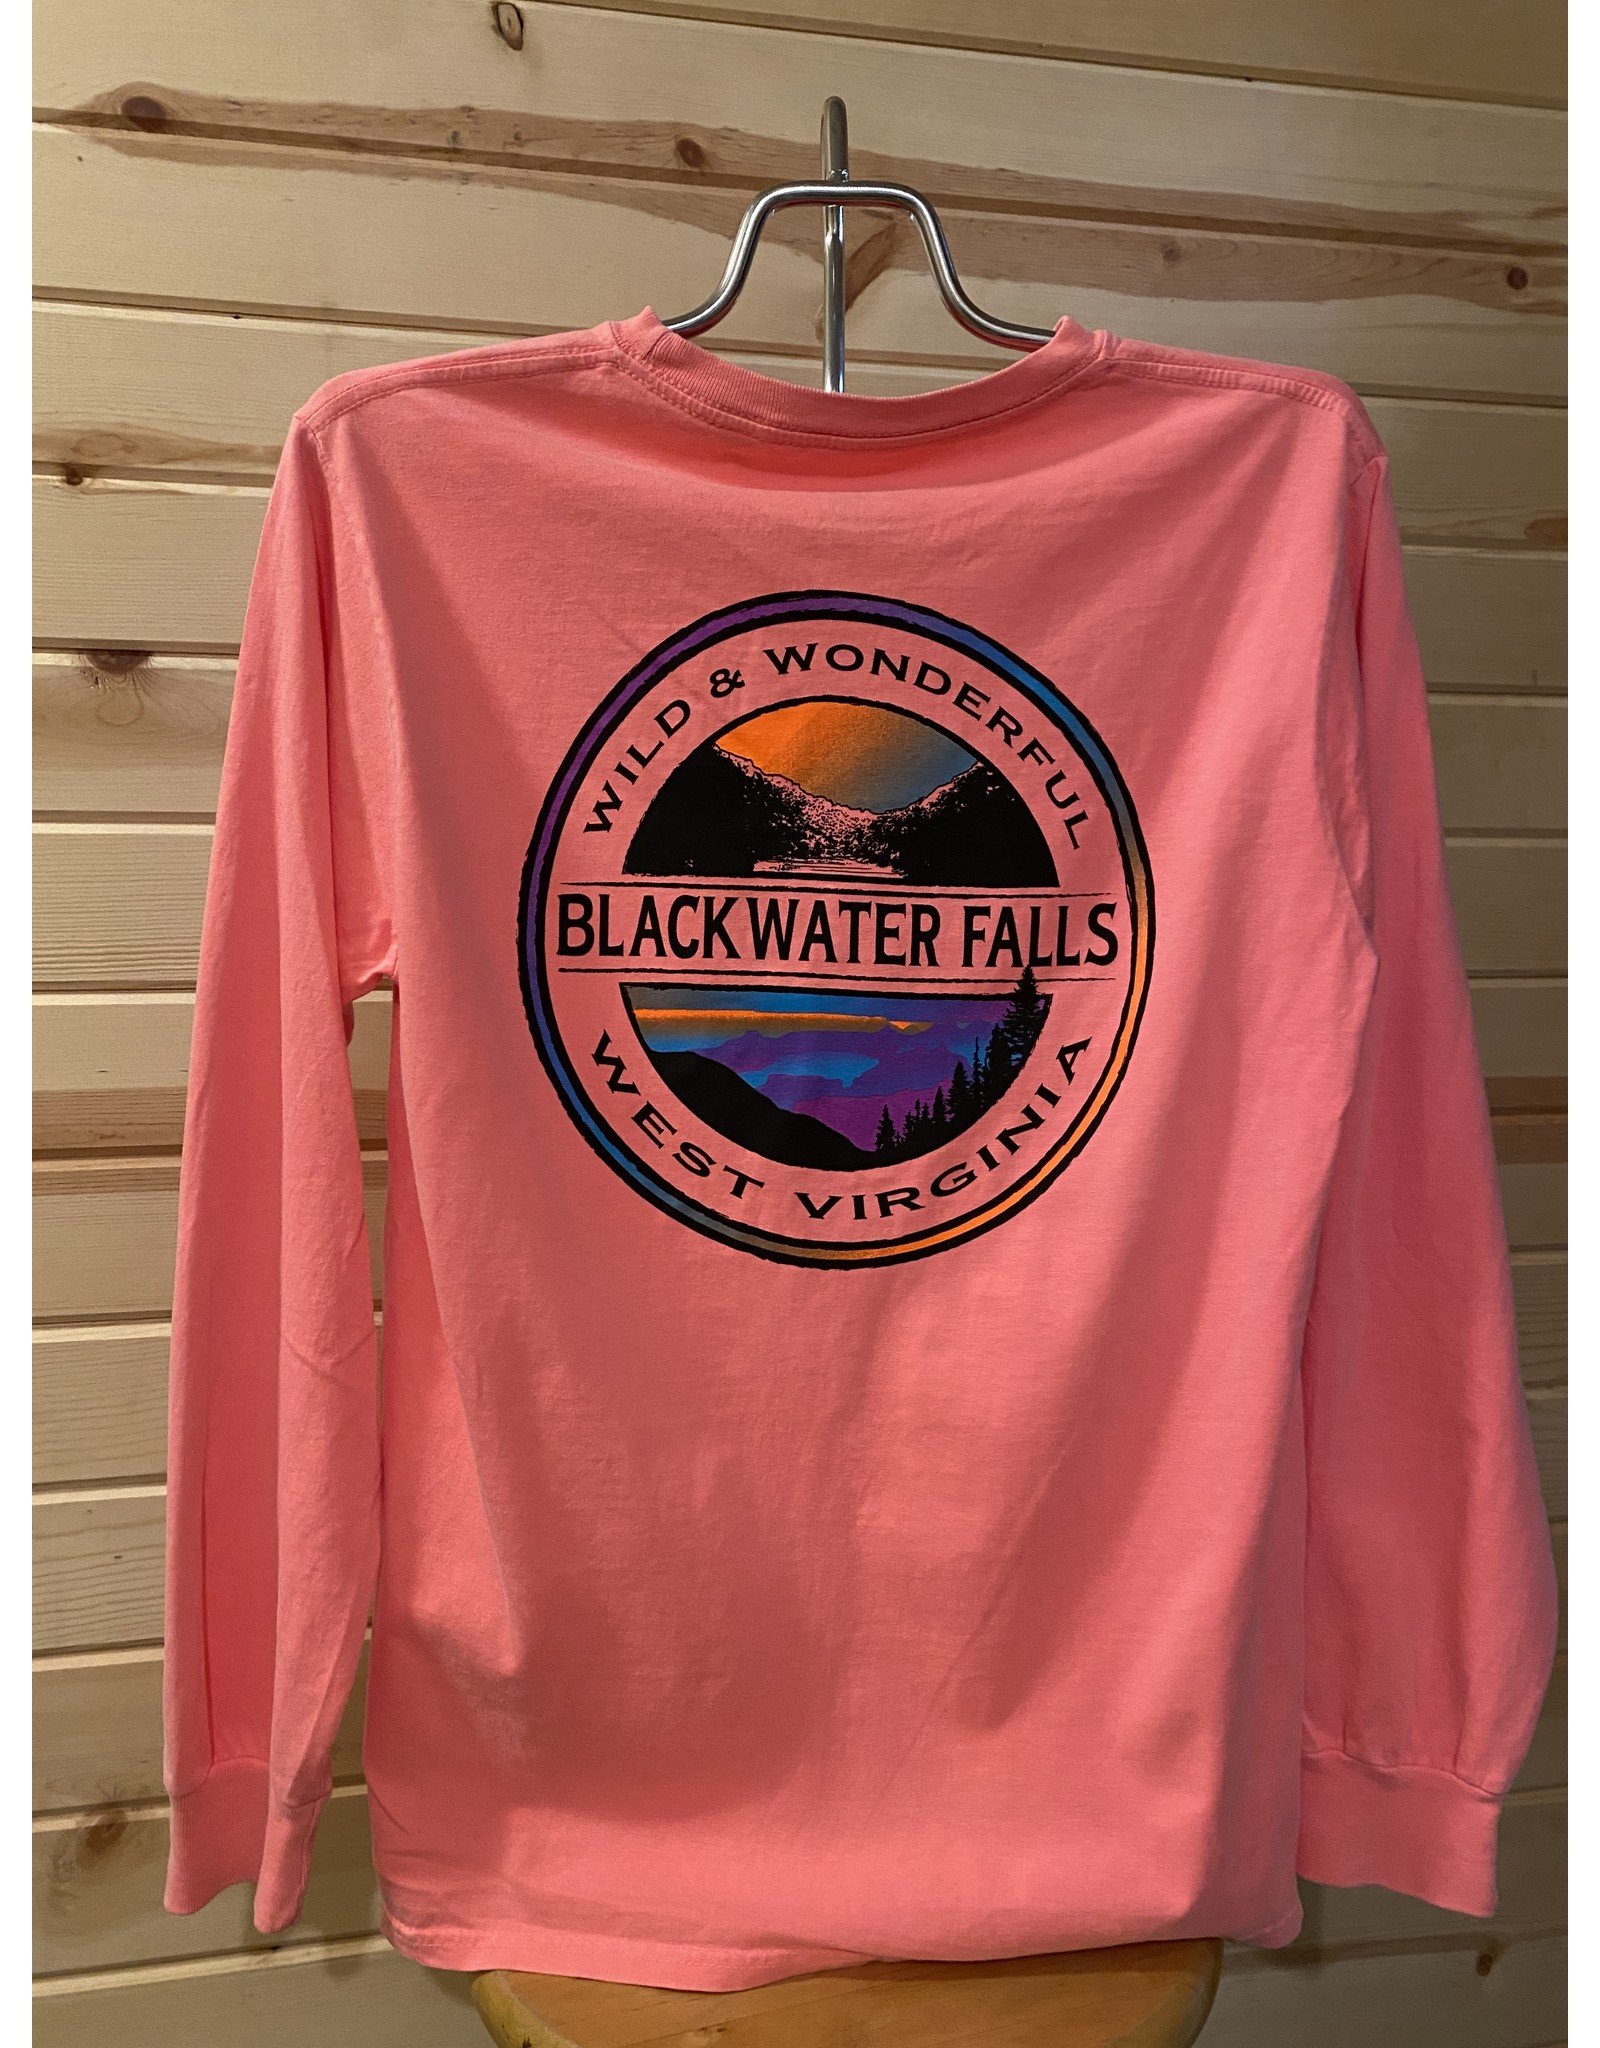 Blue84 Blackwater Falls Neon Geo Seal - LONG SLEEVE